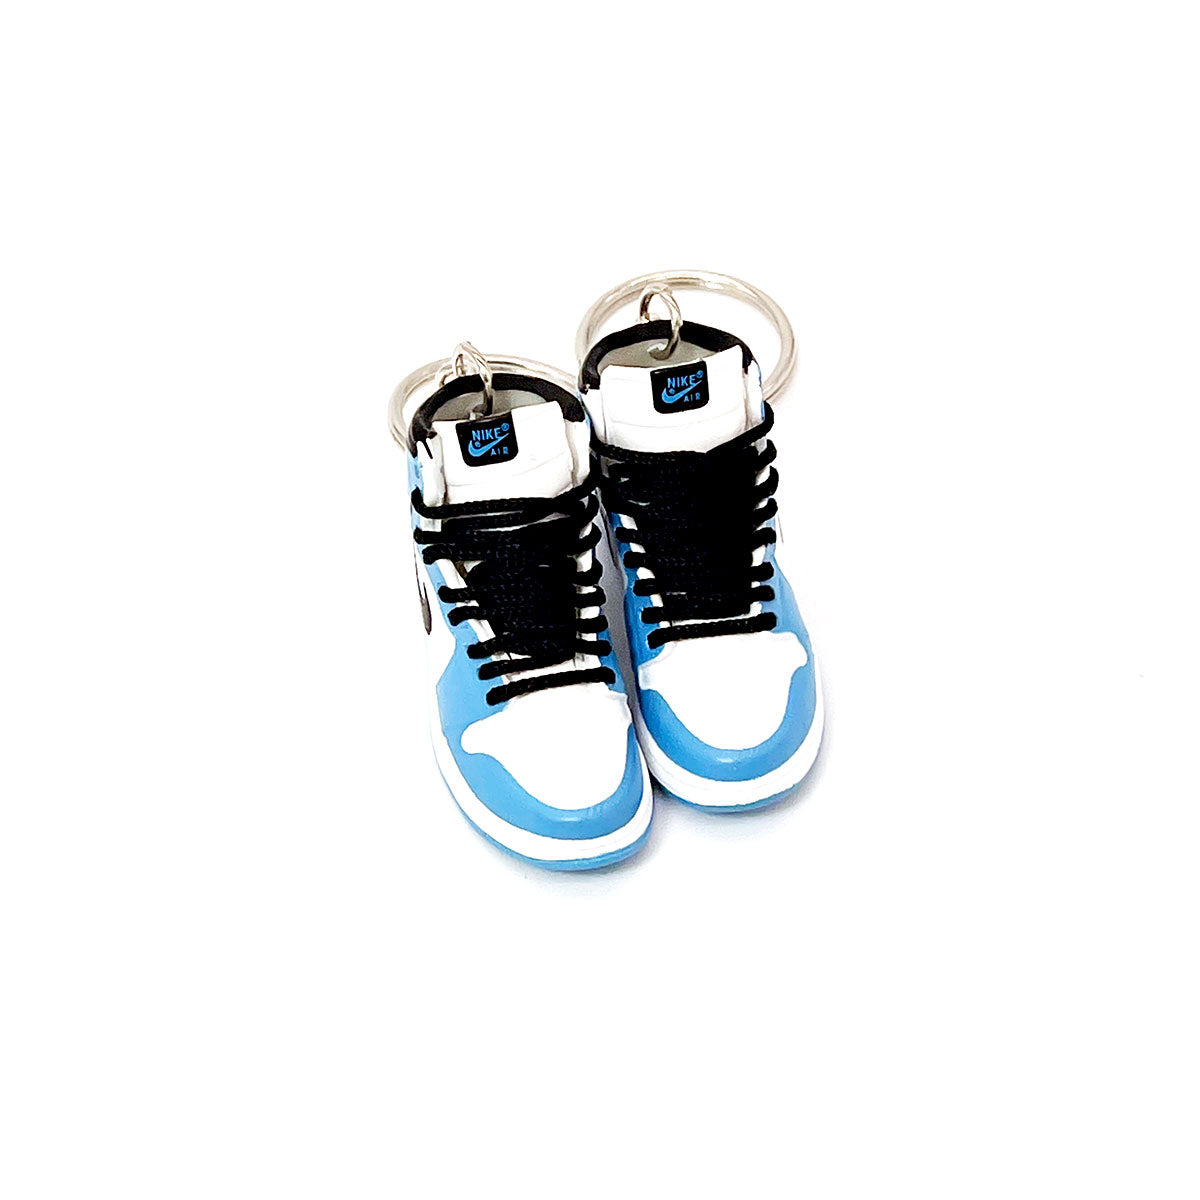 3D Sneaker Keychain- Air Jordan 1 High White University Blue Pair